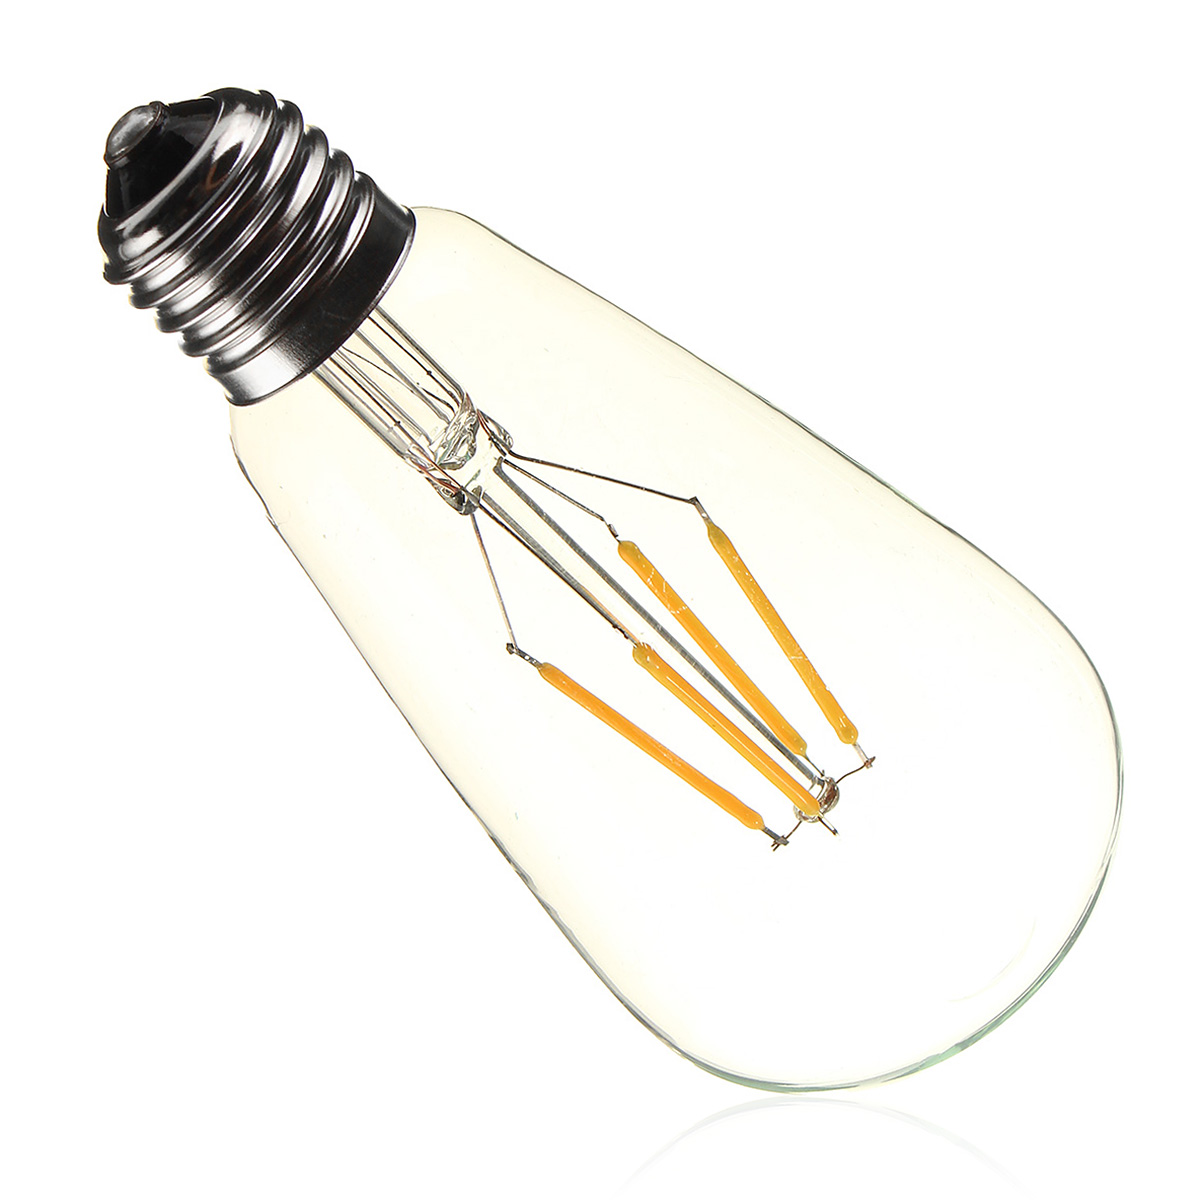 E27-ST64-4W-Clear-Cover-Dimmable-Edison-Retro-Vintage-Filament-COB-LED-Bulb-Light-Lamp-AC110220V-1113826